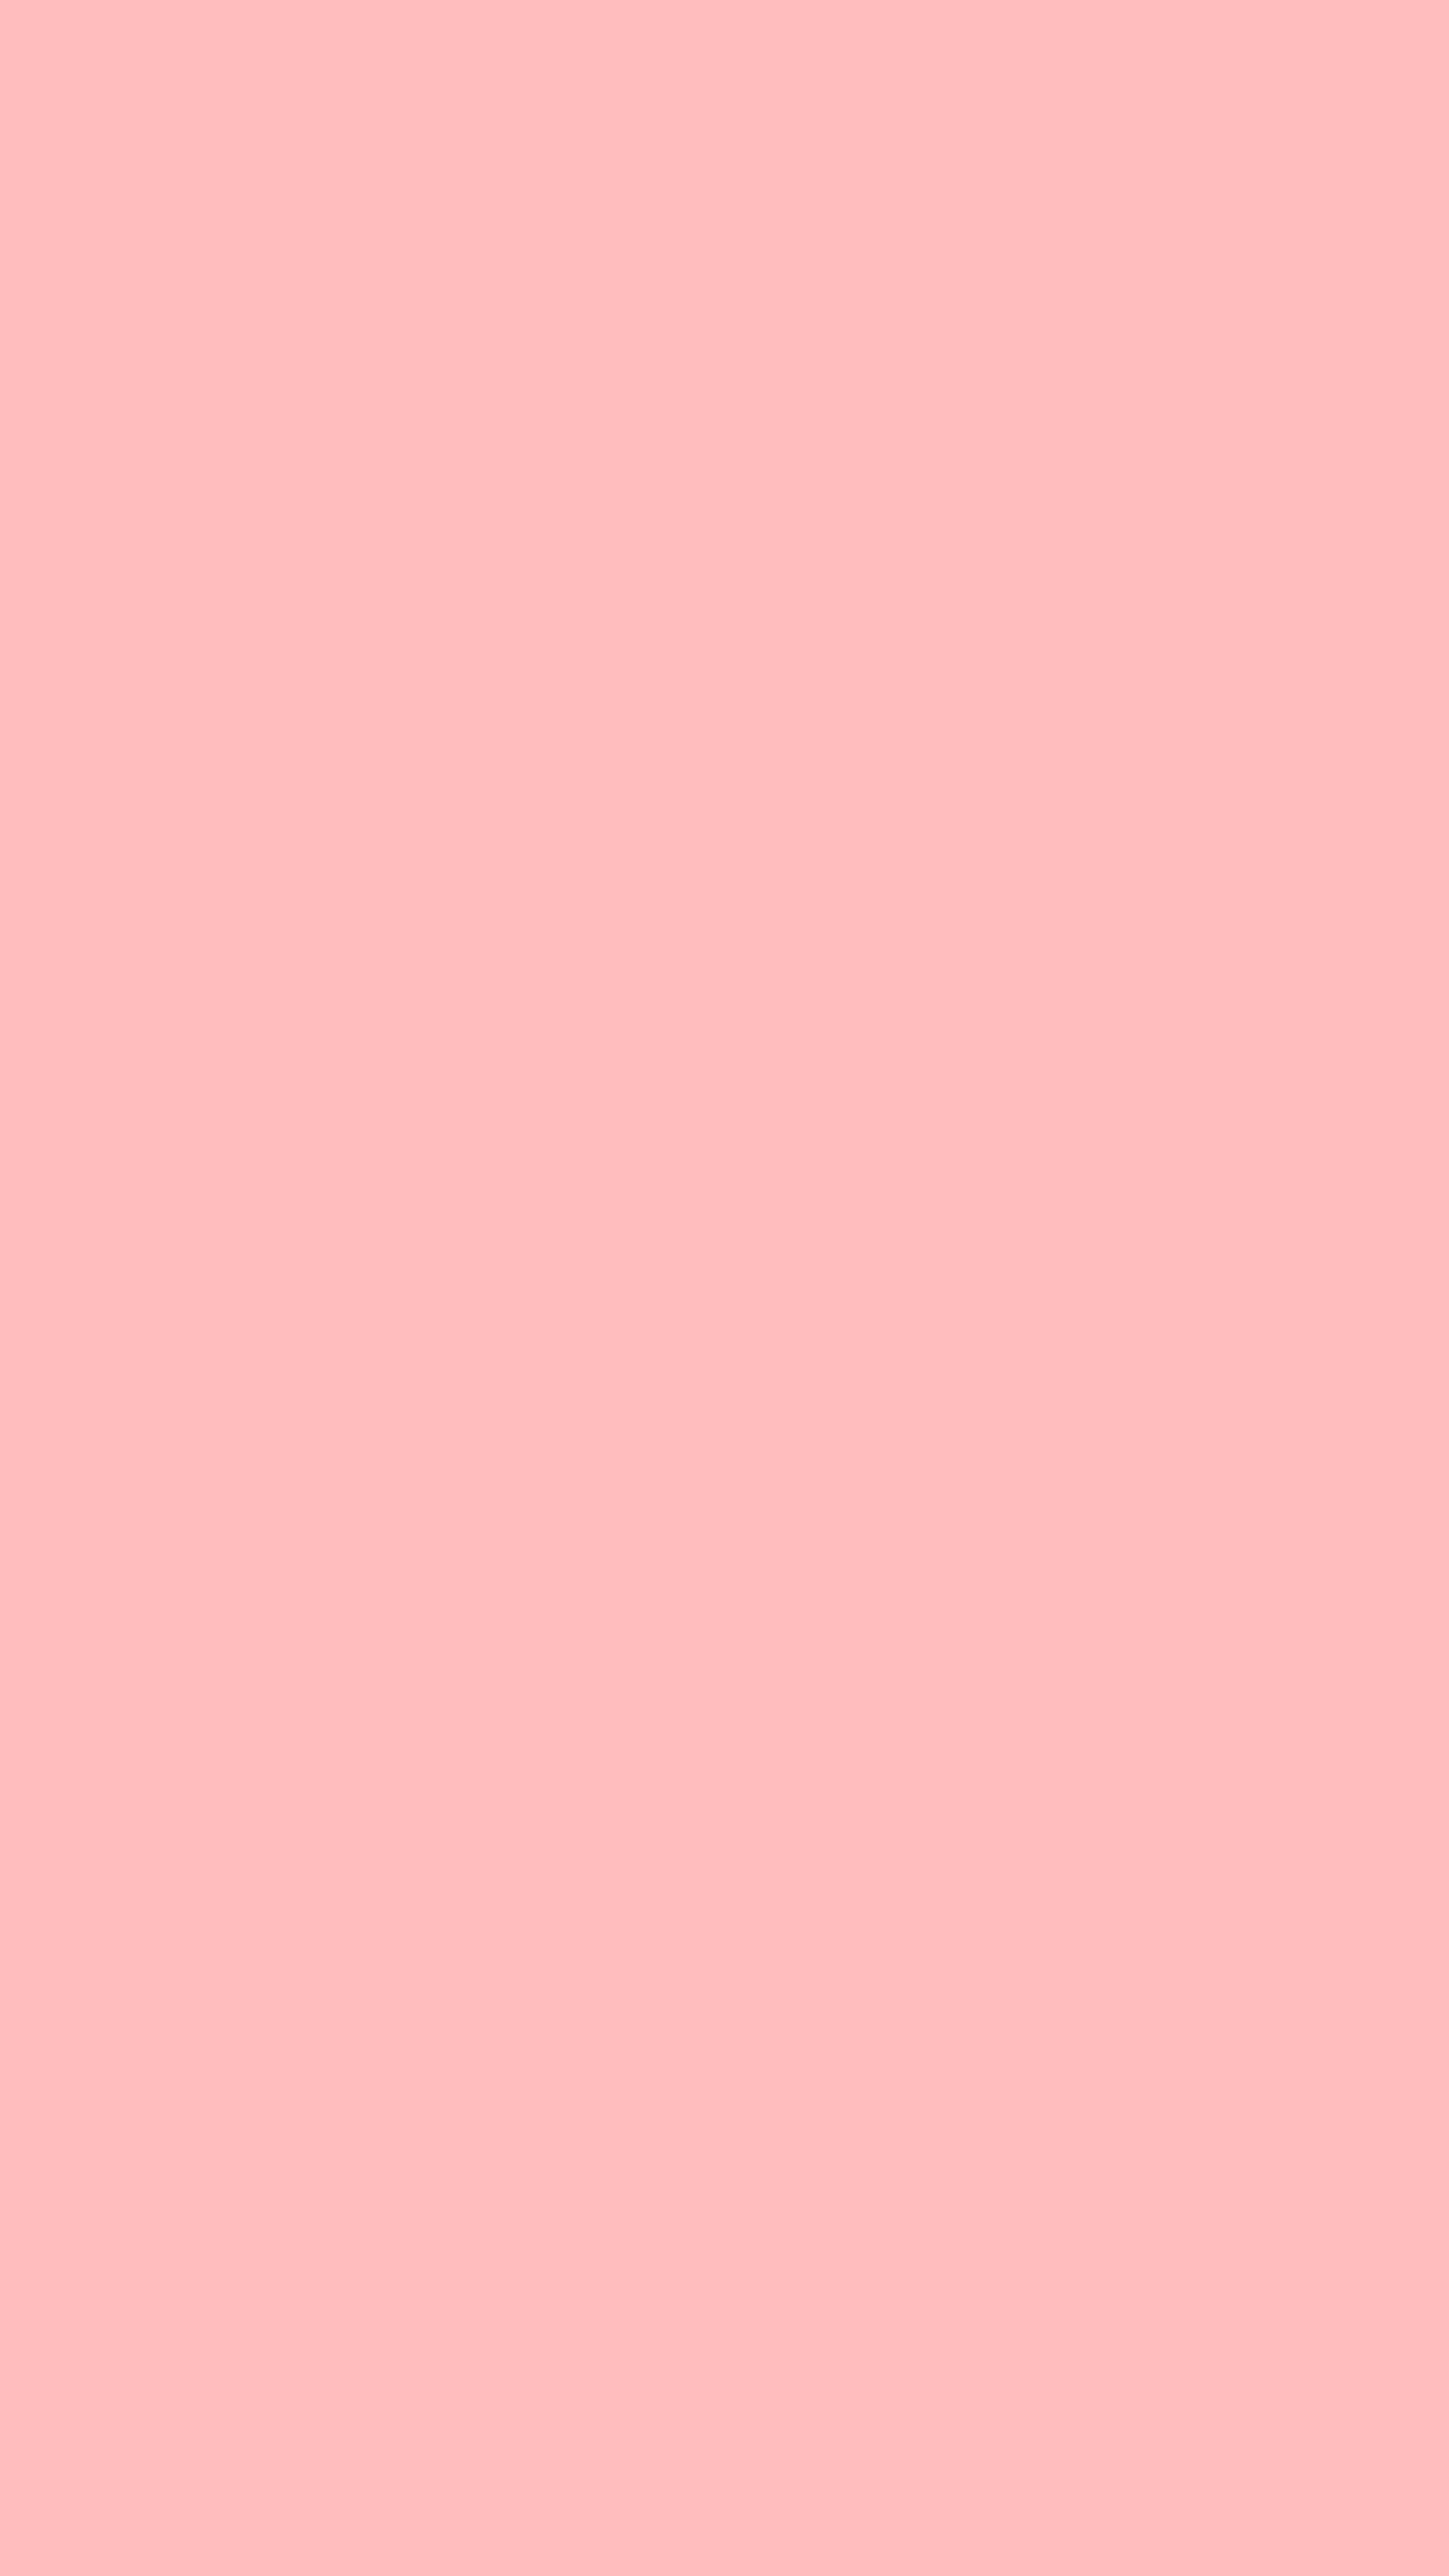 Pretty Pink Plain Color Background Hình nền[ae2a355c08f645d5a3f9]